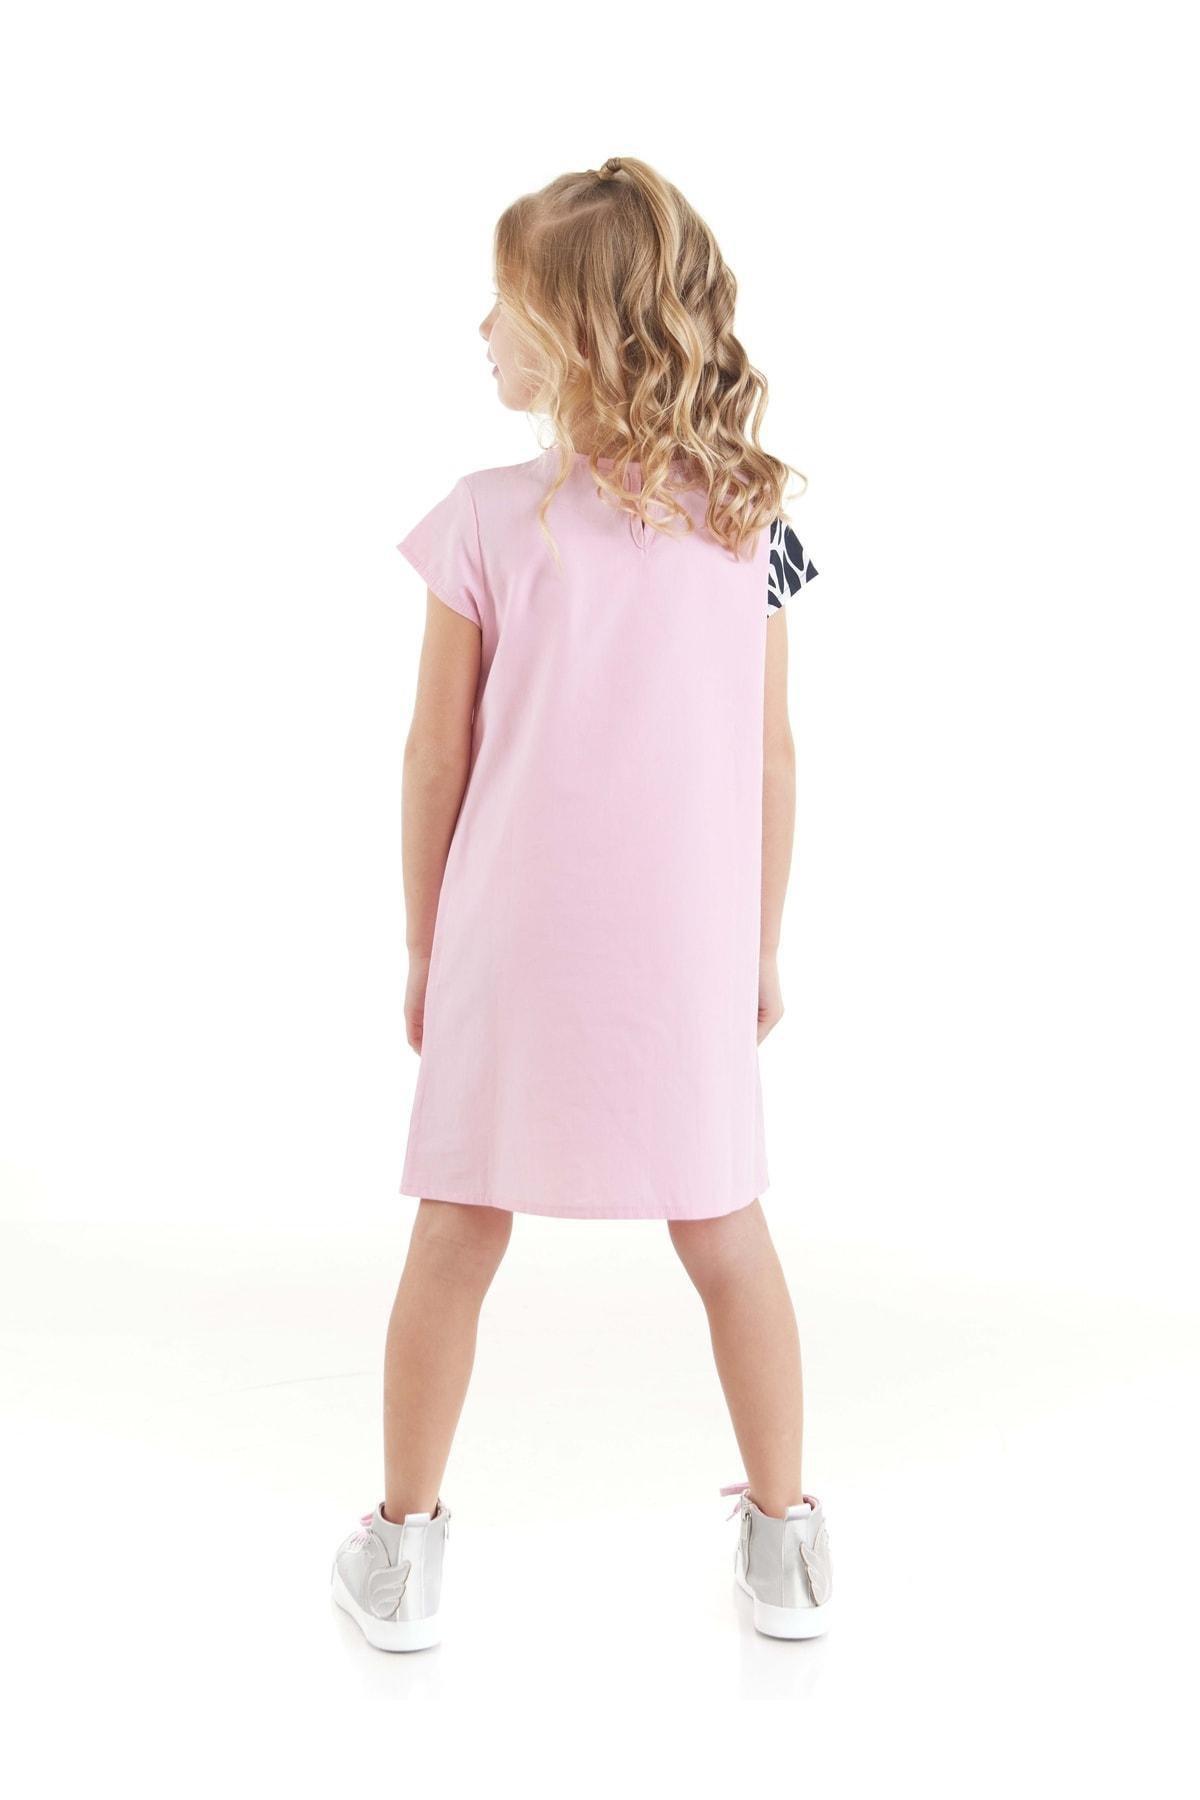 Denokids - Pink Ruffled Patterned Dress, Kids Girls